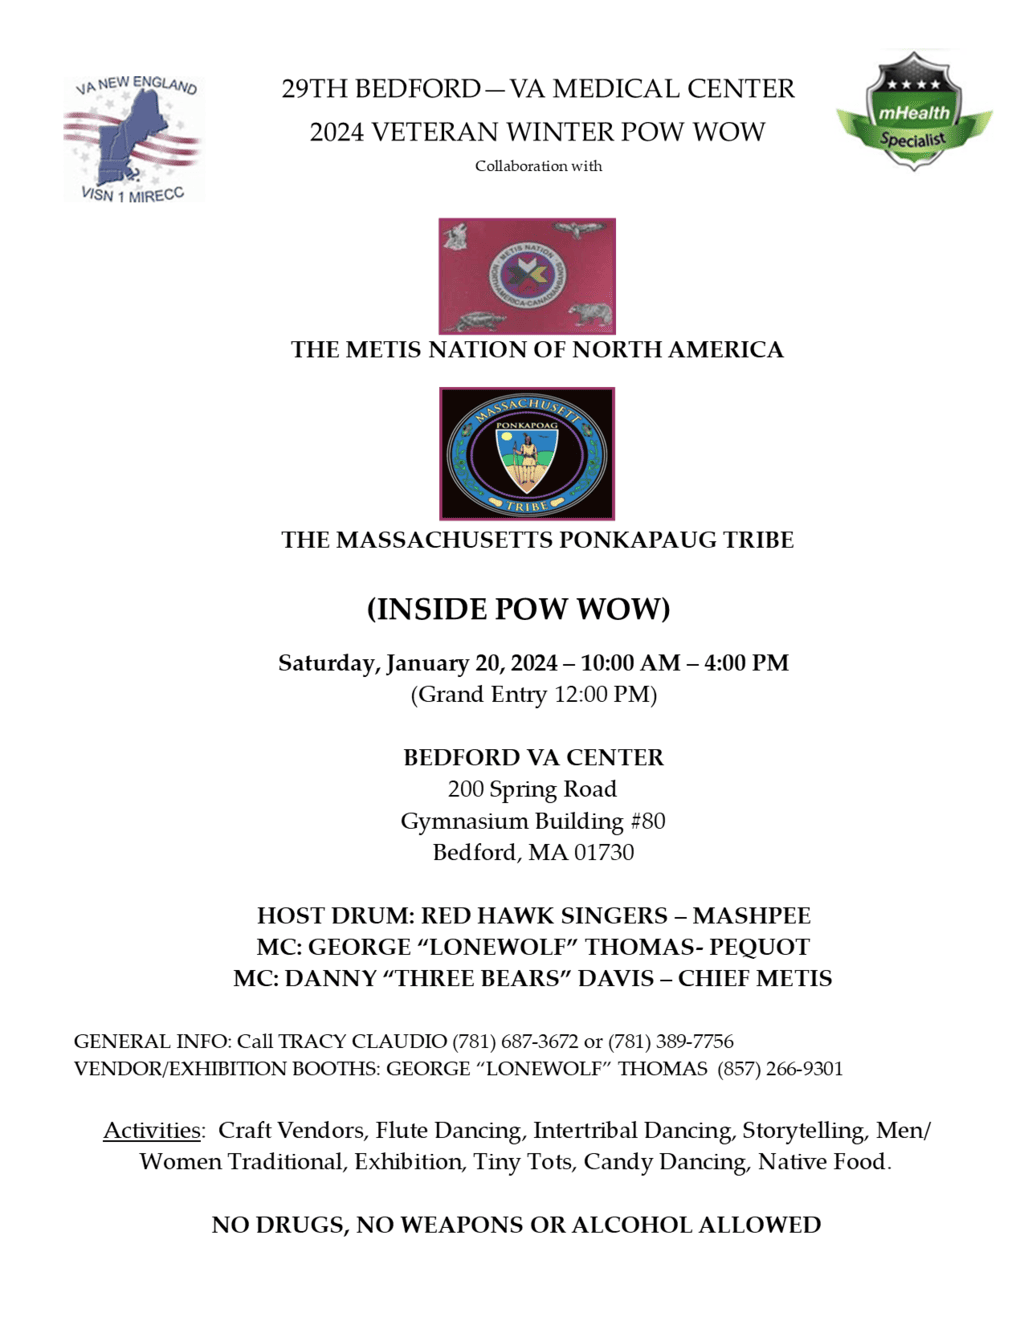 29th Bedford VA (Veterans Administration) -Medical Center 2024 Veteran Winter Pow Wow